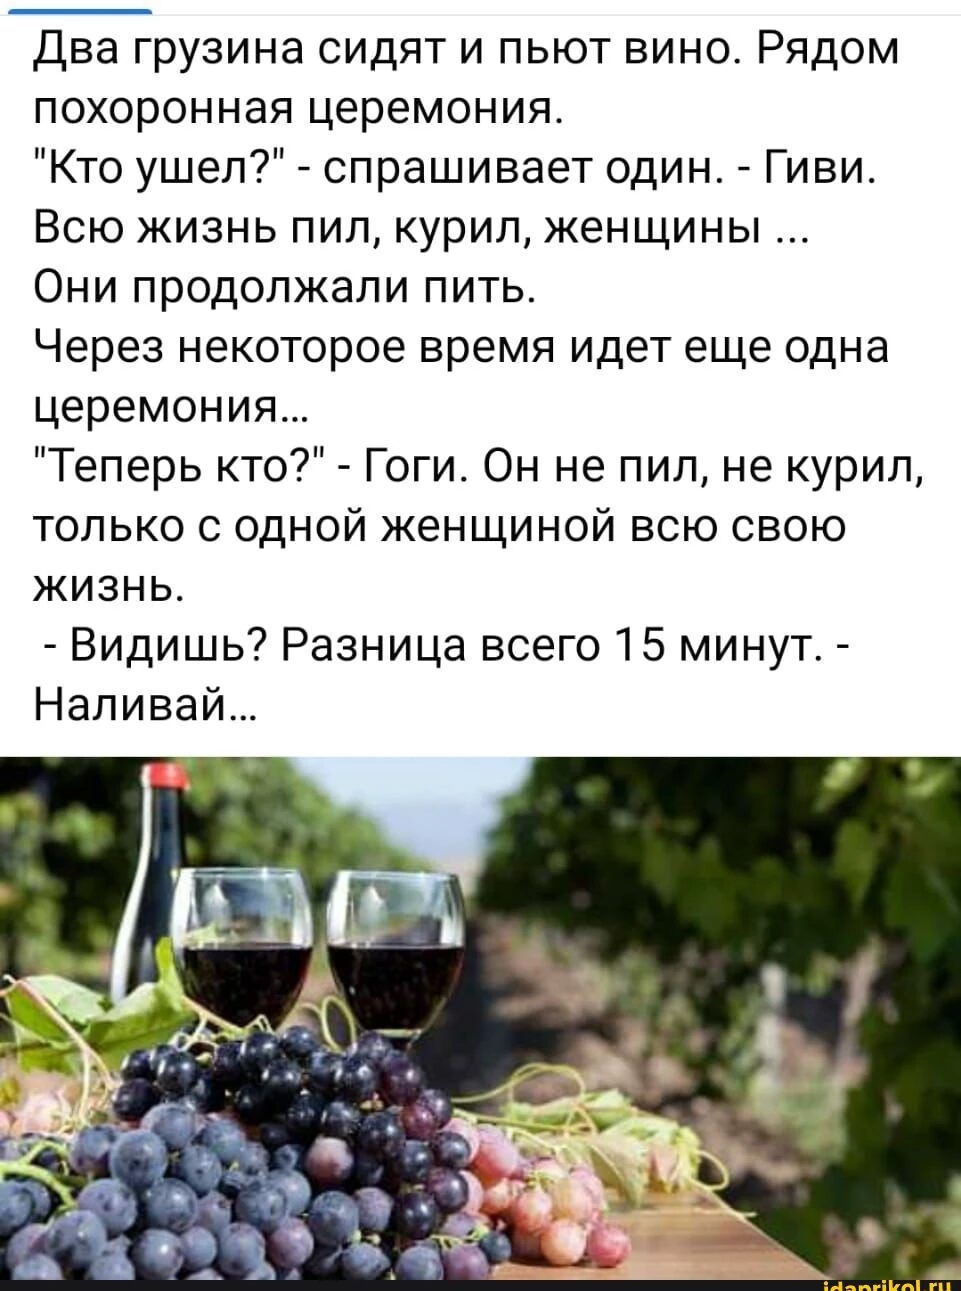 Сидят два грузина вино пьют